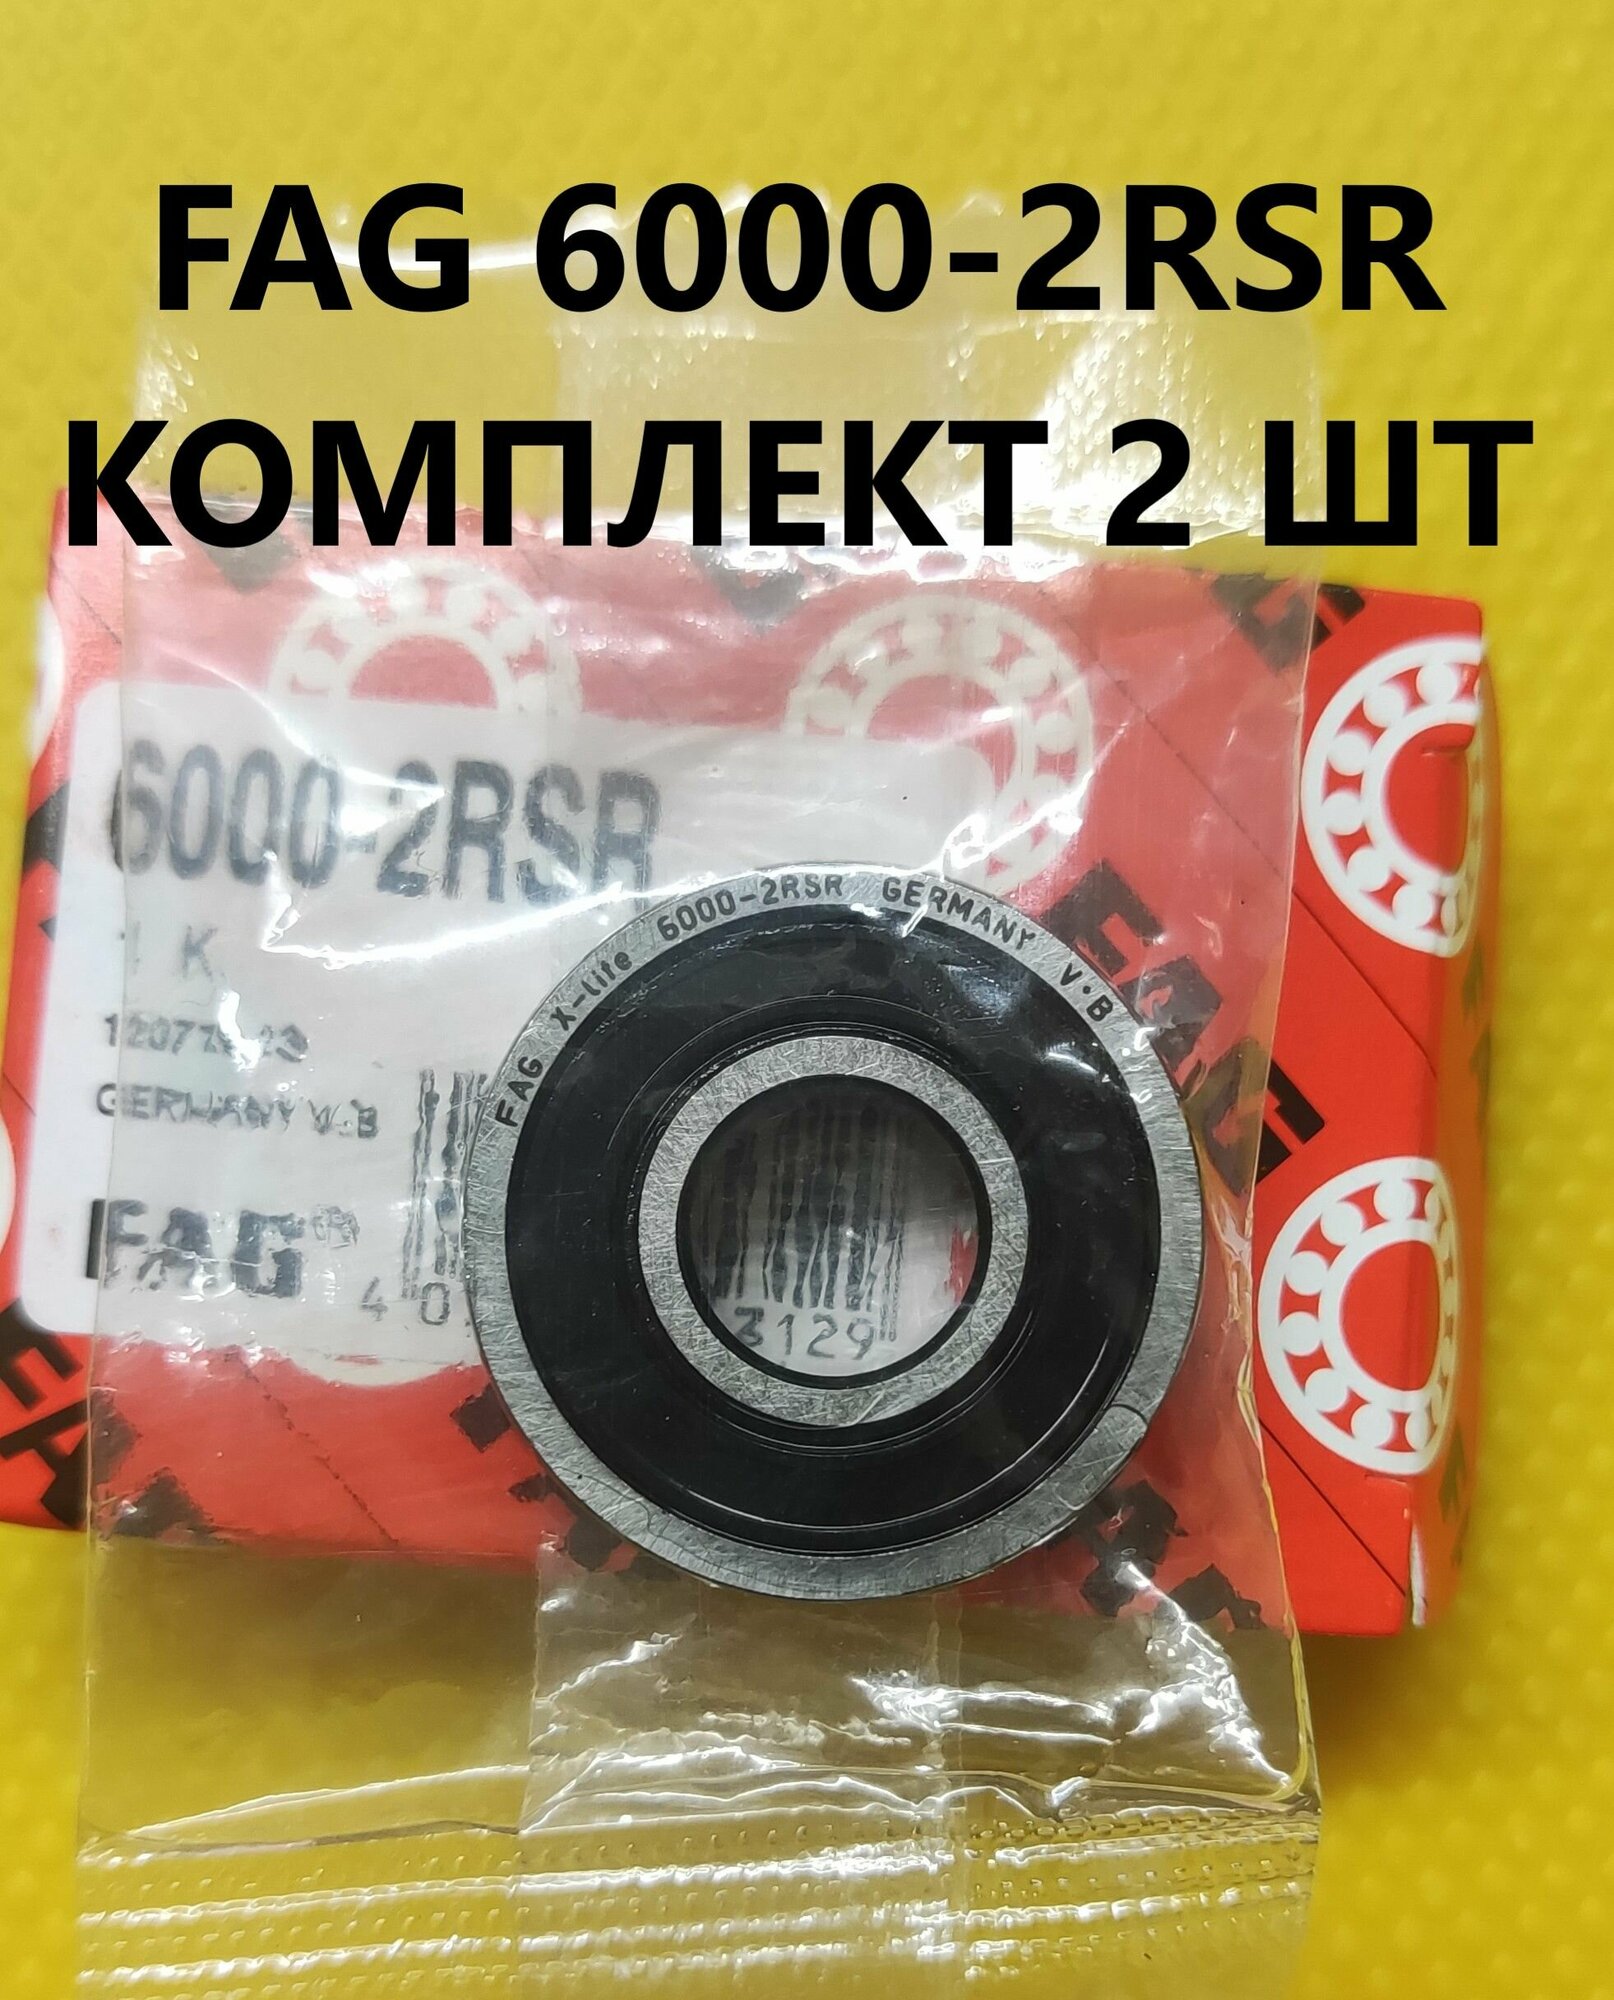 Подшипник FAG 6000-2RSR (10x26x8) комплект 2 шт